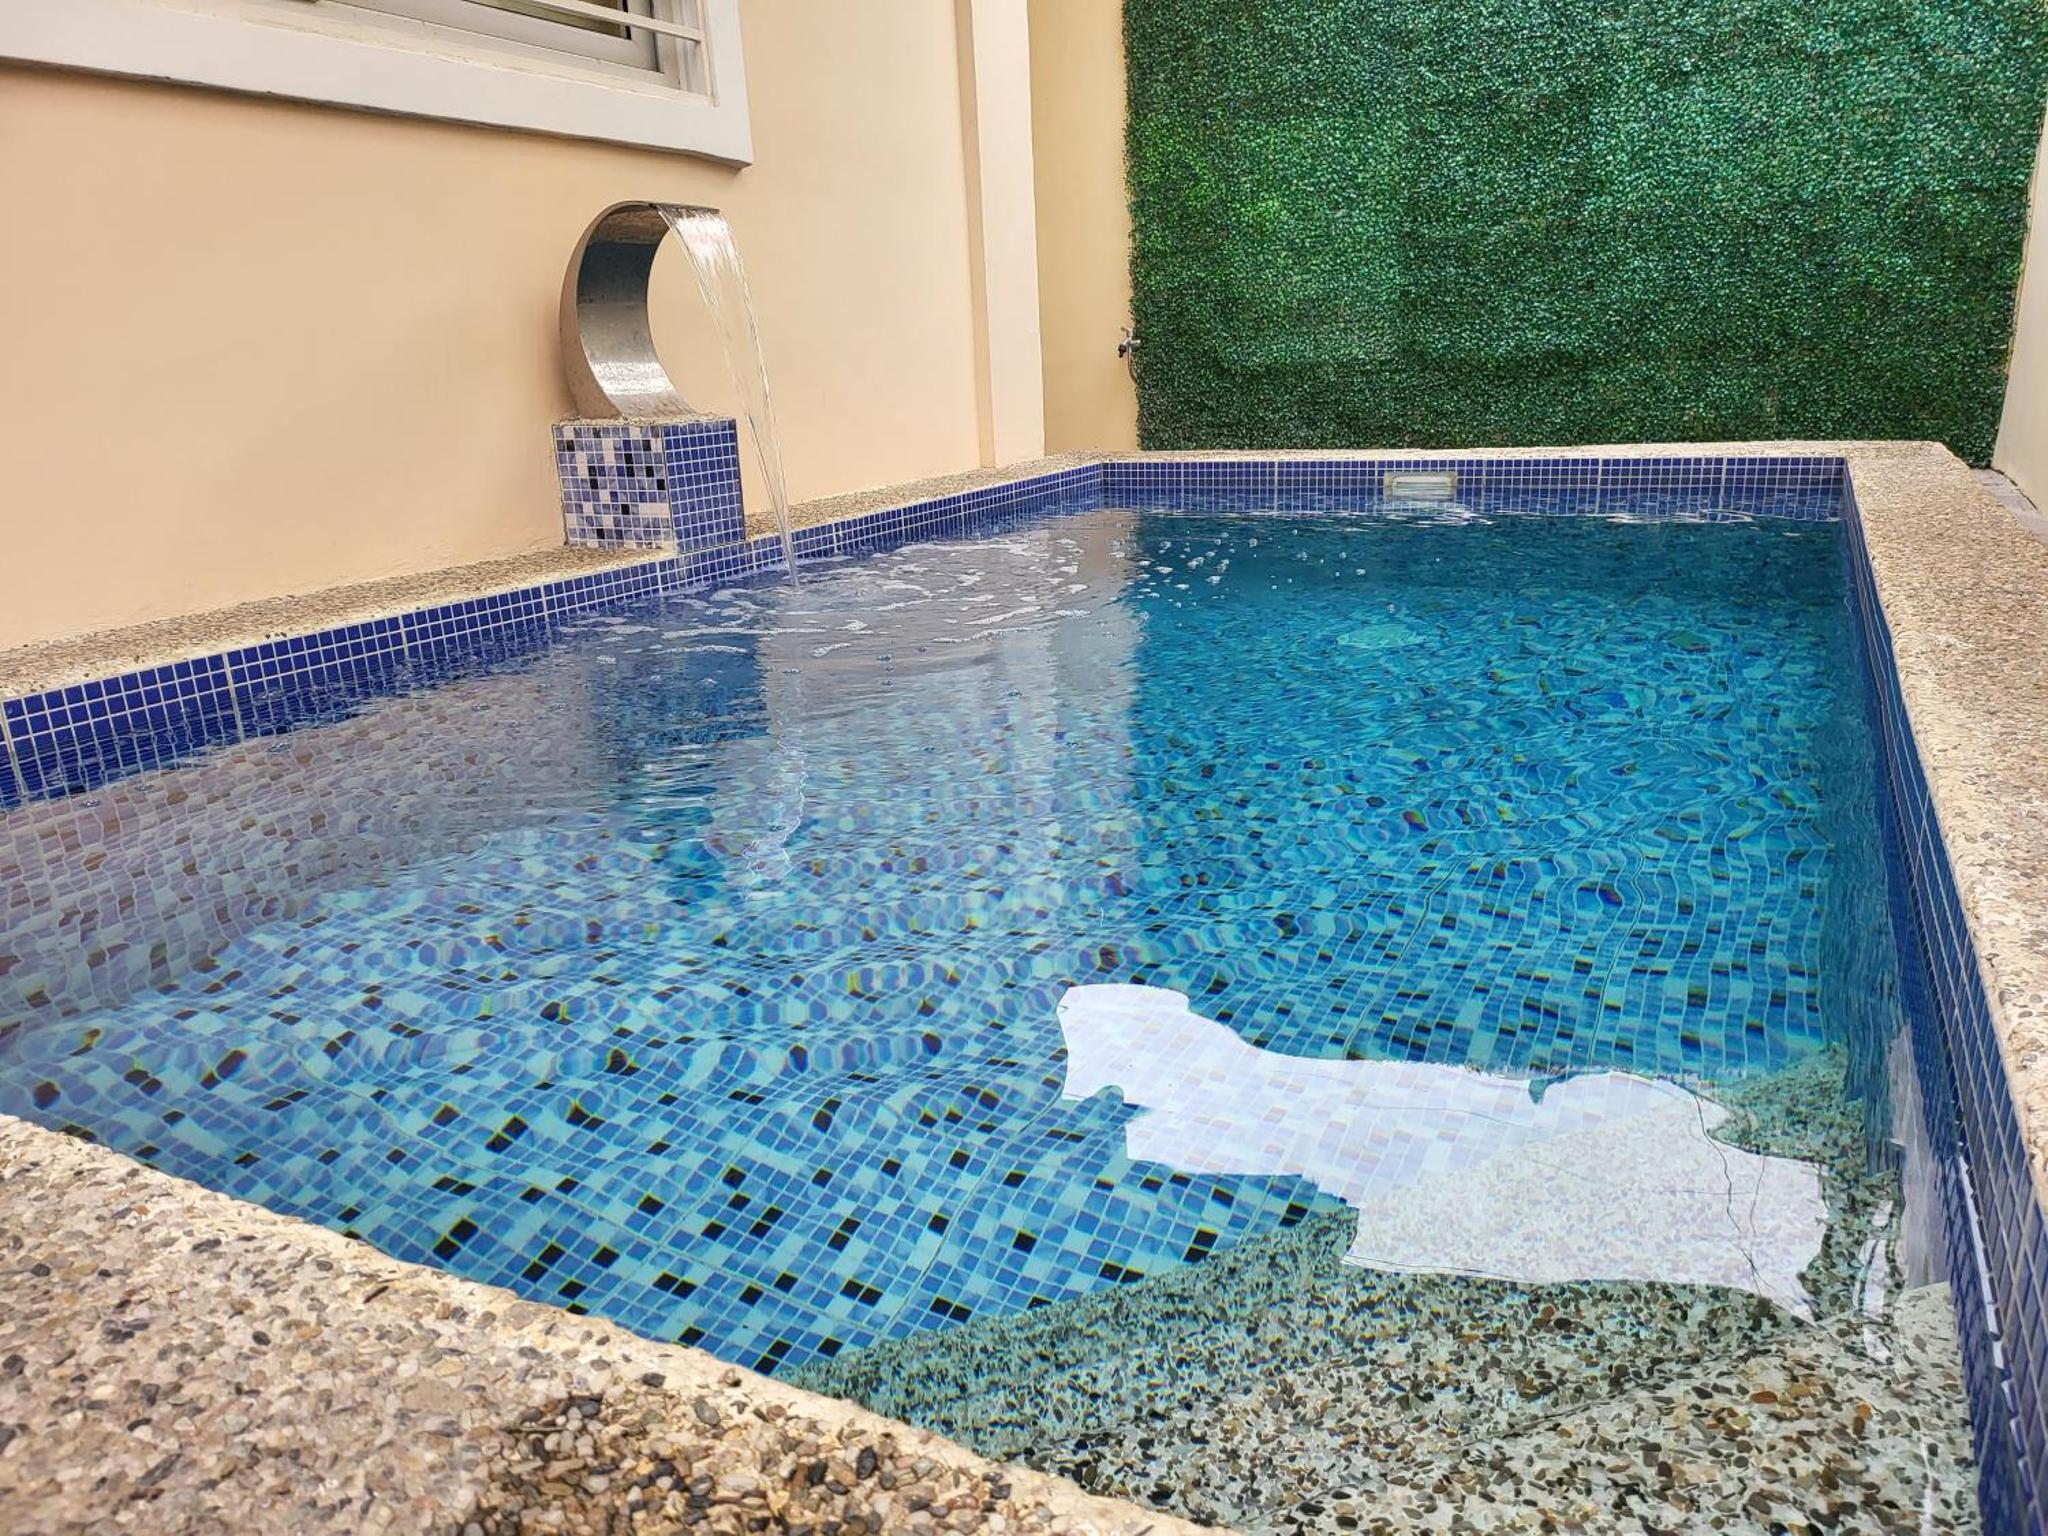 Luxury 3BR Villa w Plunge Pool near SM Batangas City- Instagram-Worthy